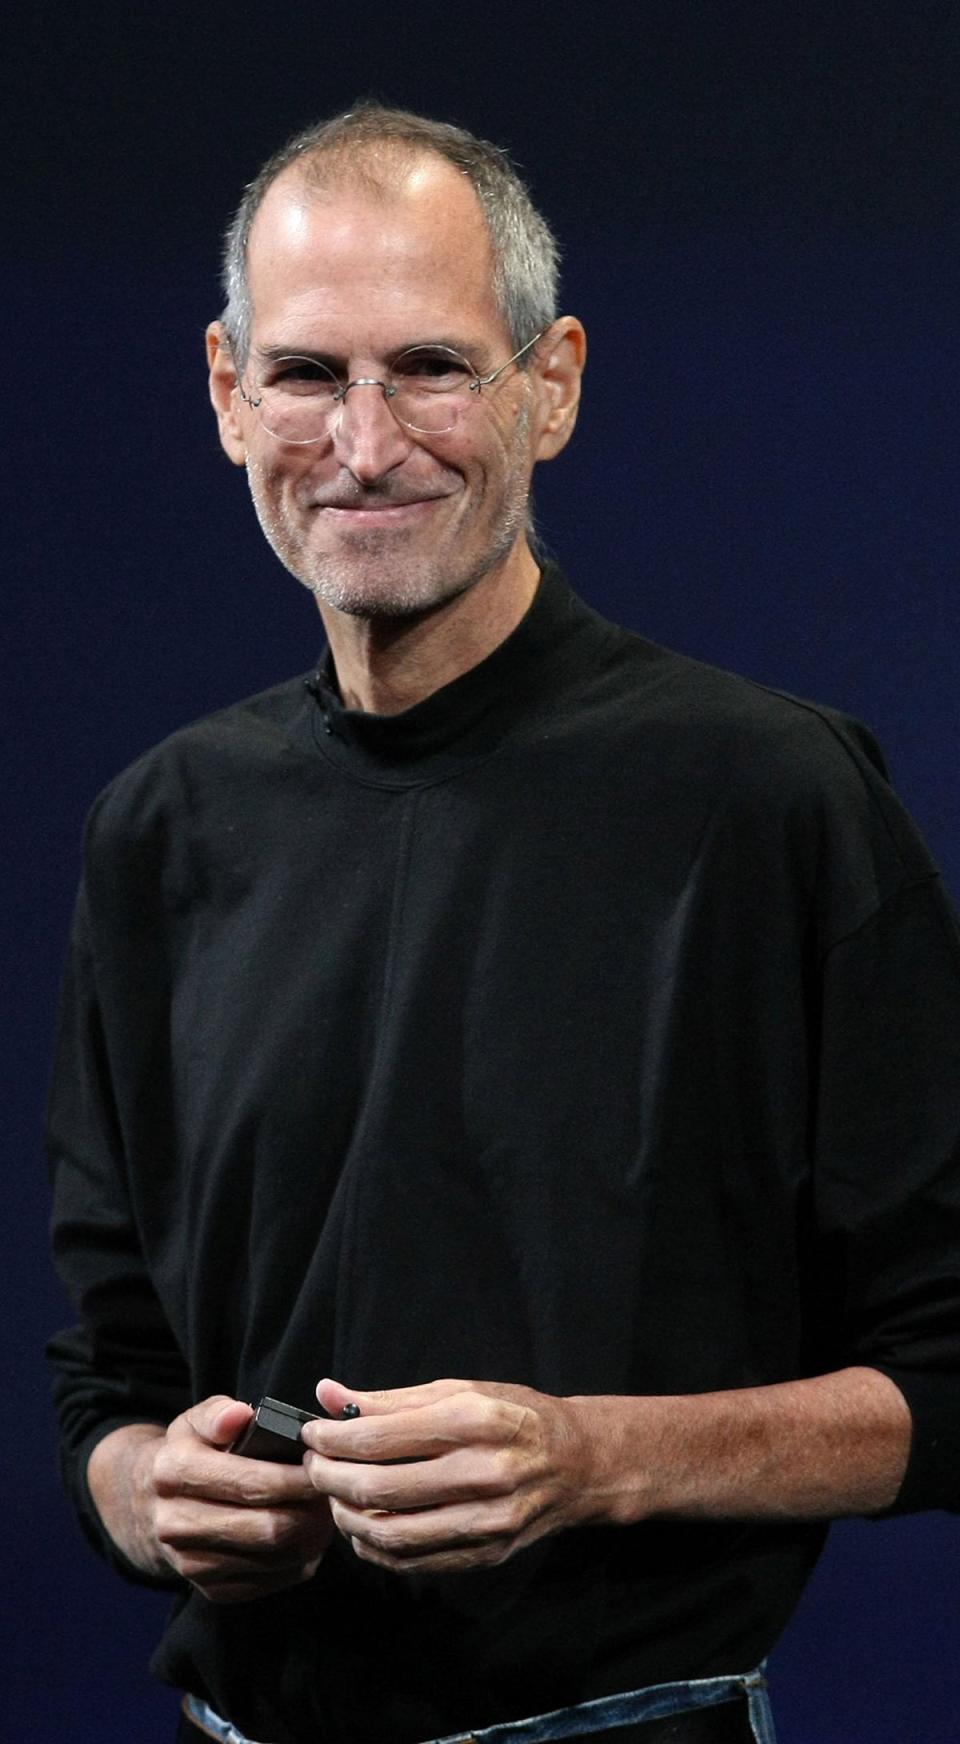 Miyake designed Steve Jobs’ black turtleneck (Justin Sullivan/Getty Images)